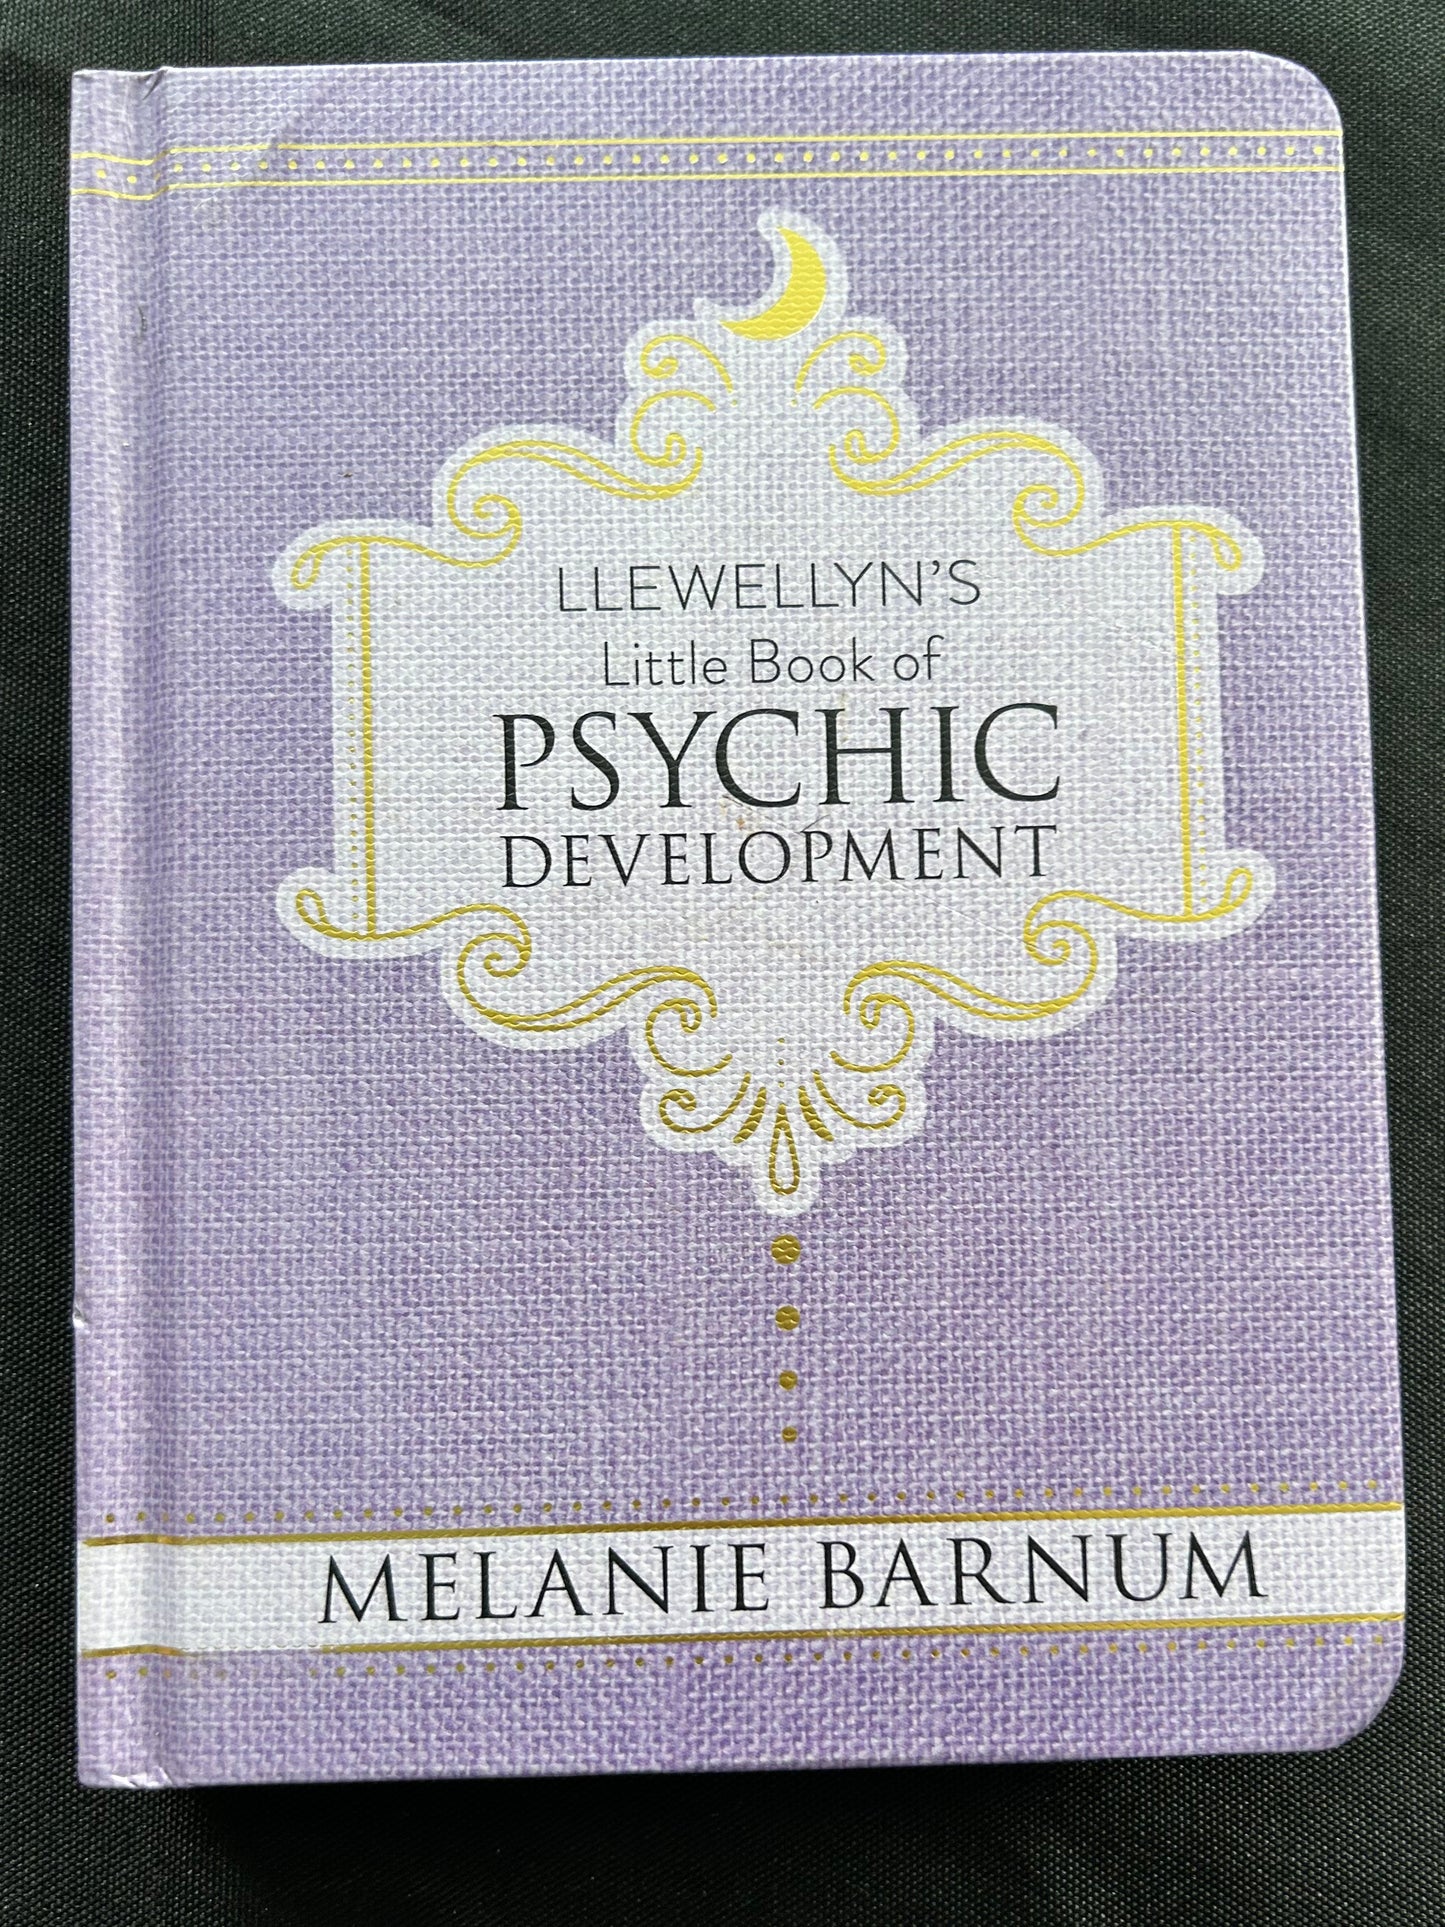 Little book of Psychic Development